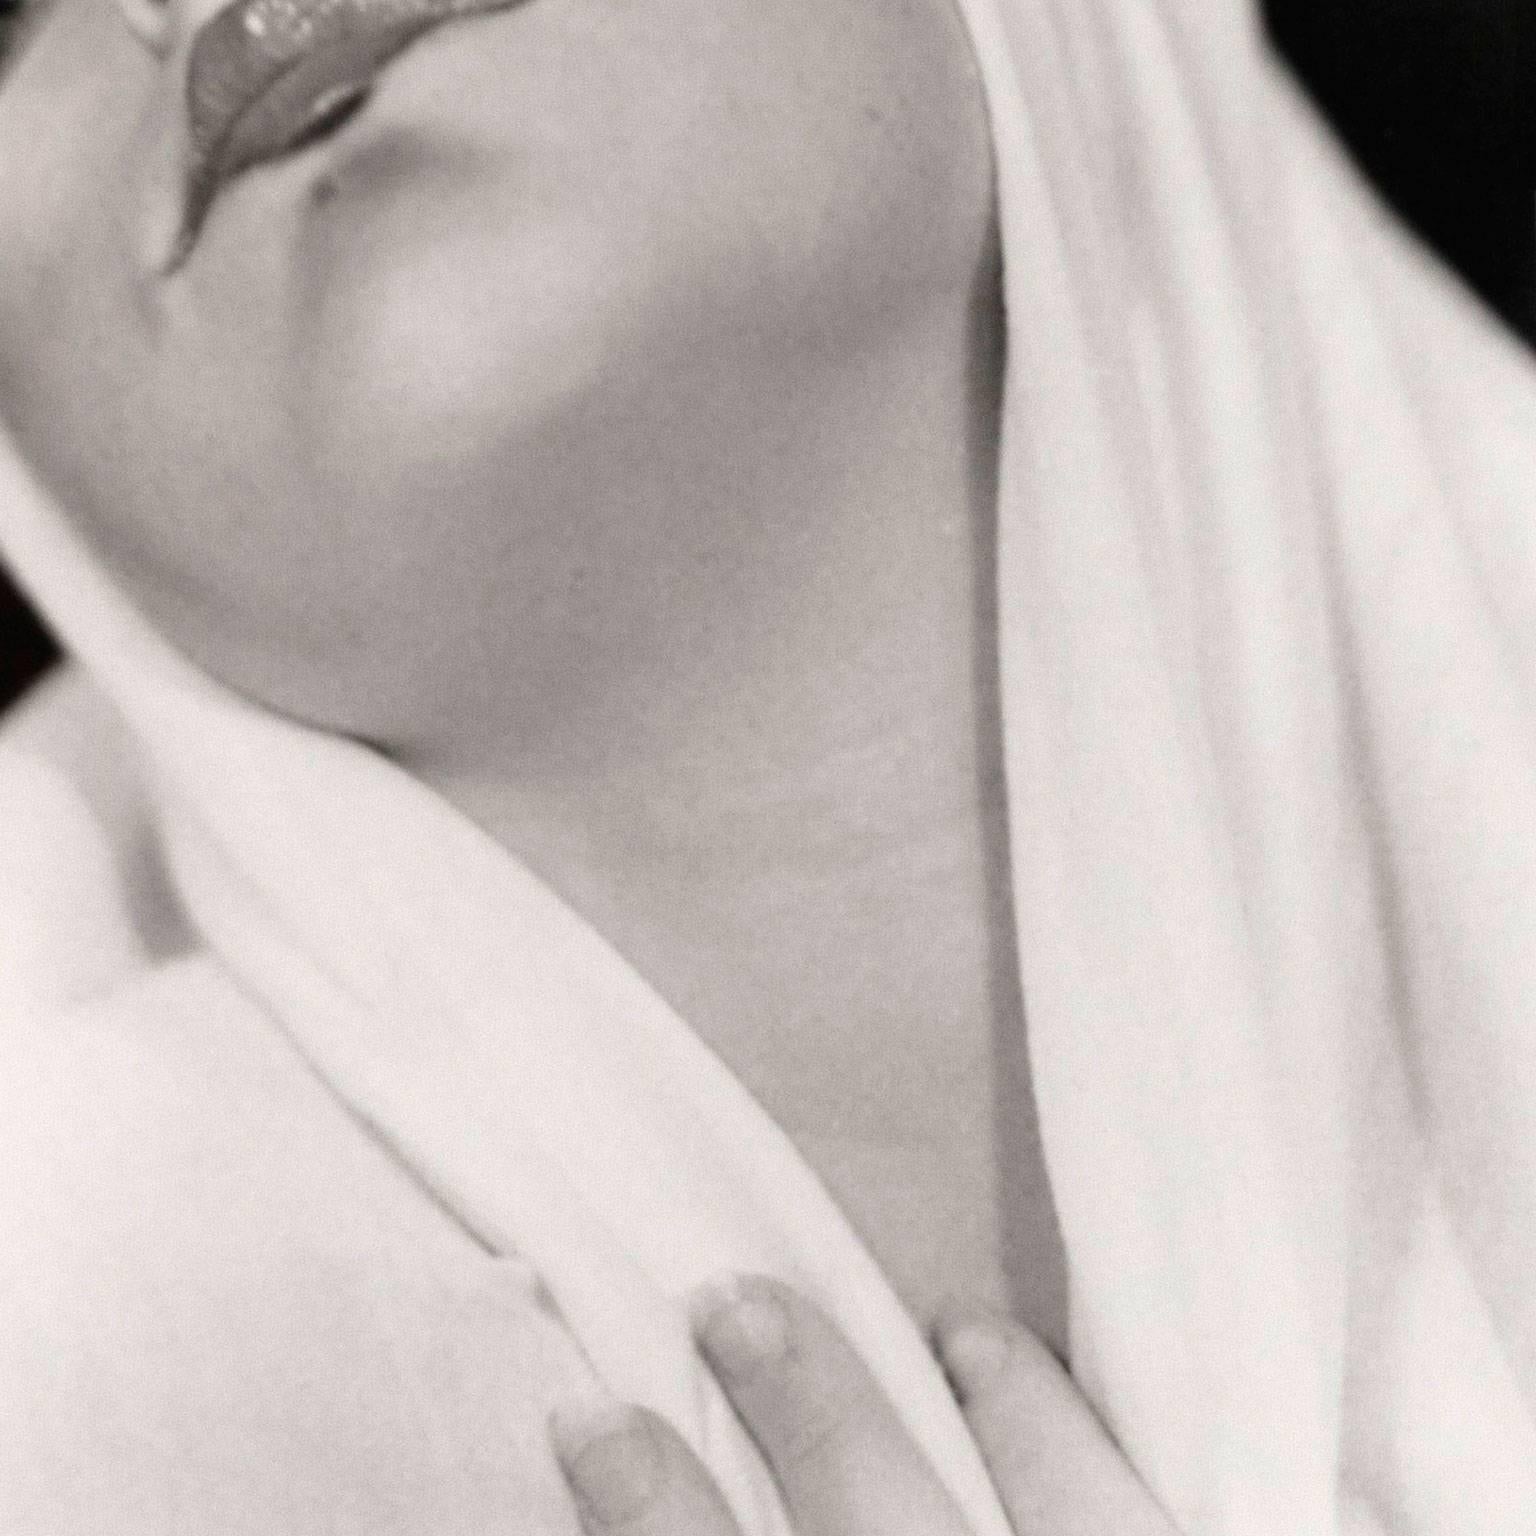 Madonna - Gray Portrait Photograph by Cindy Sherman